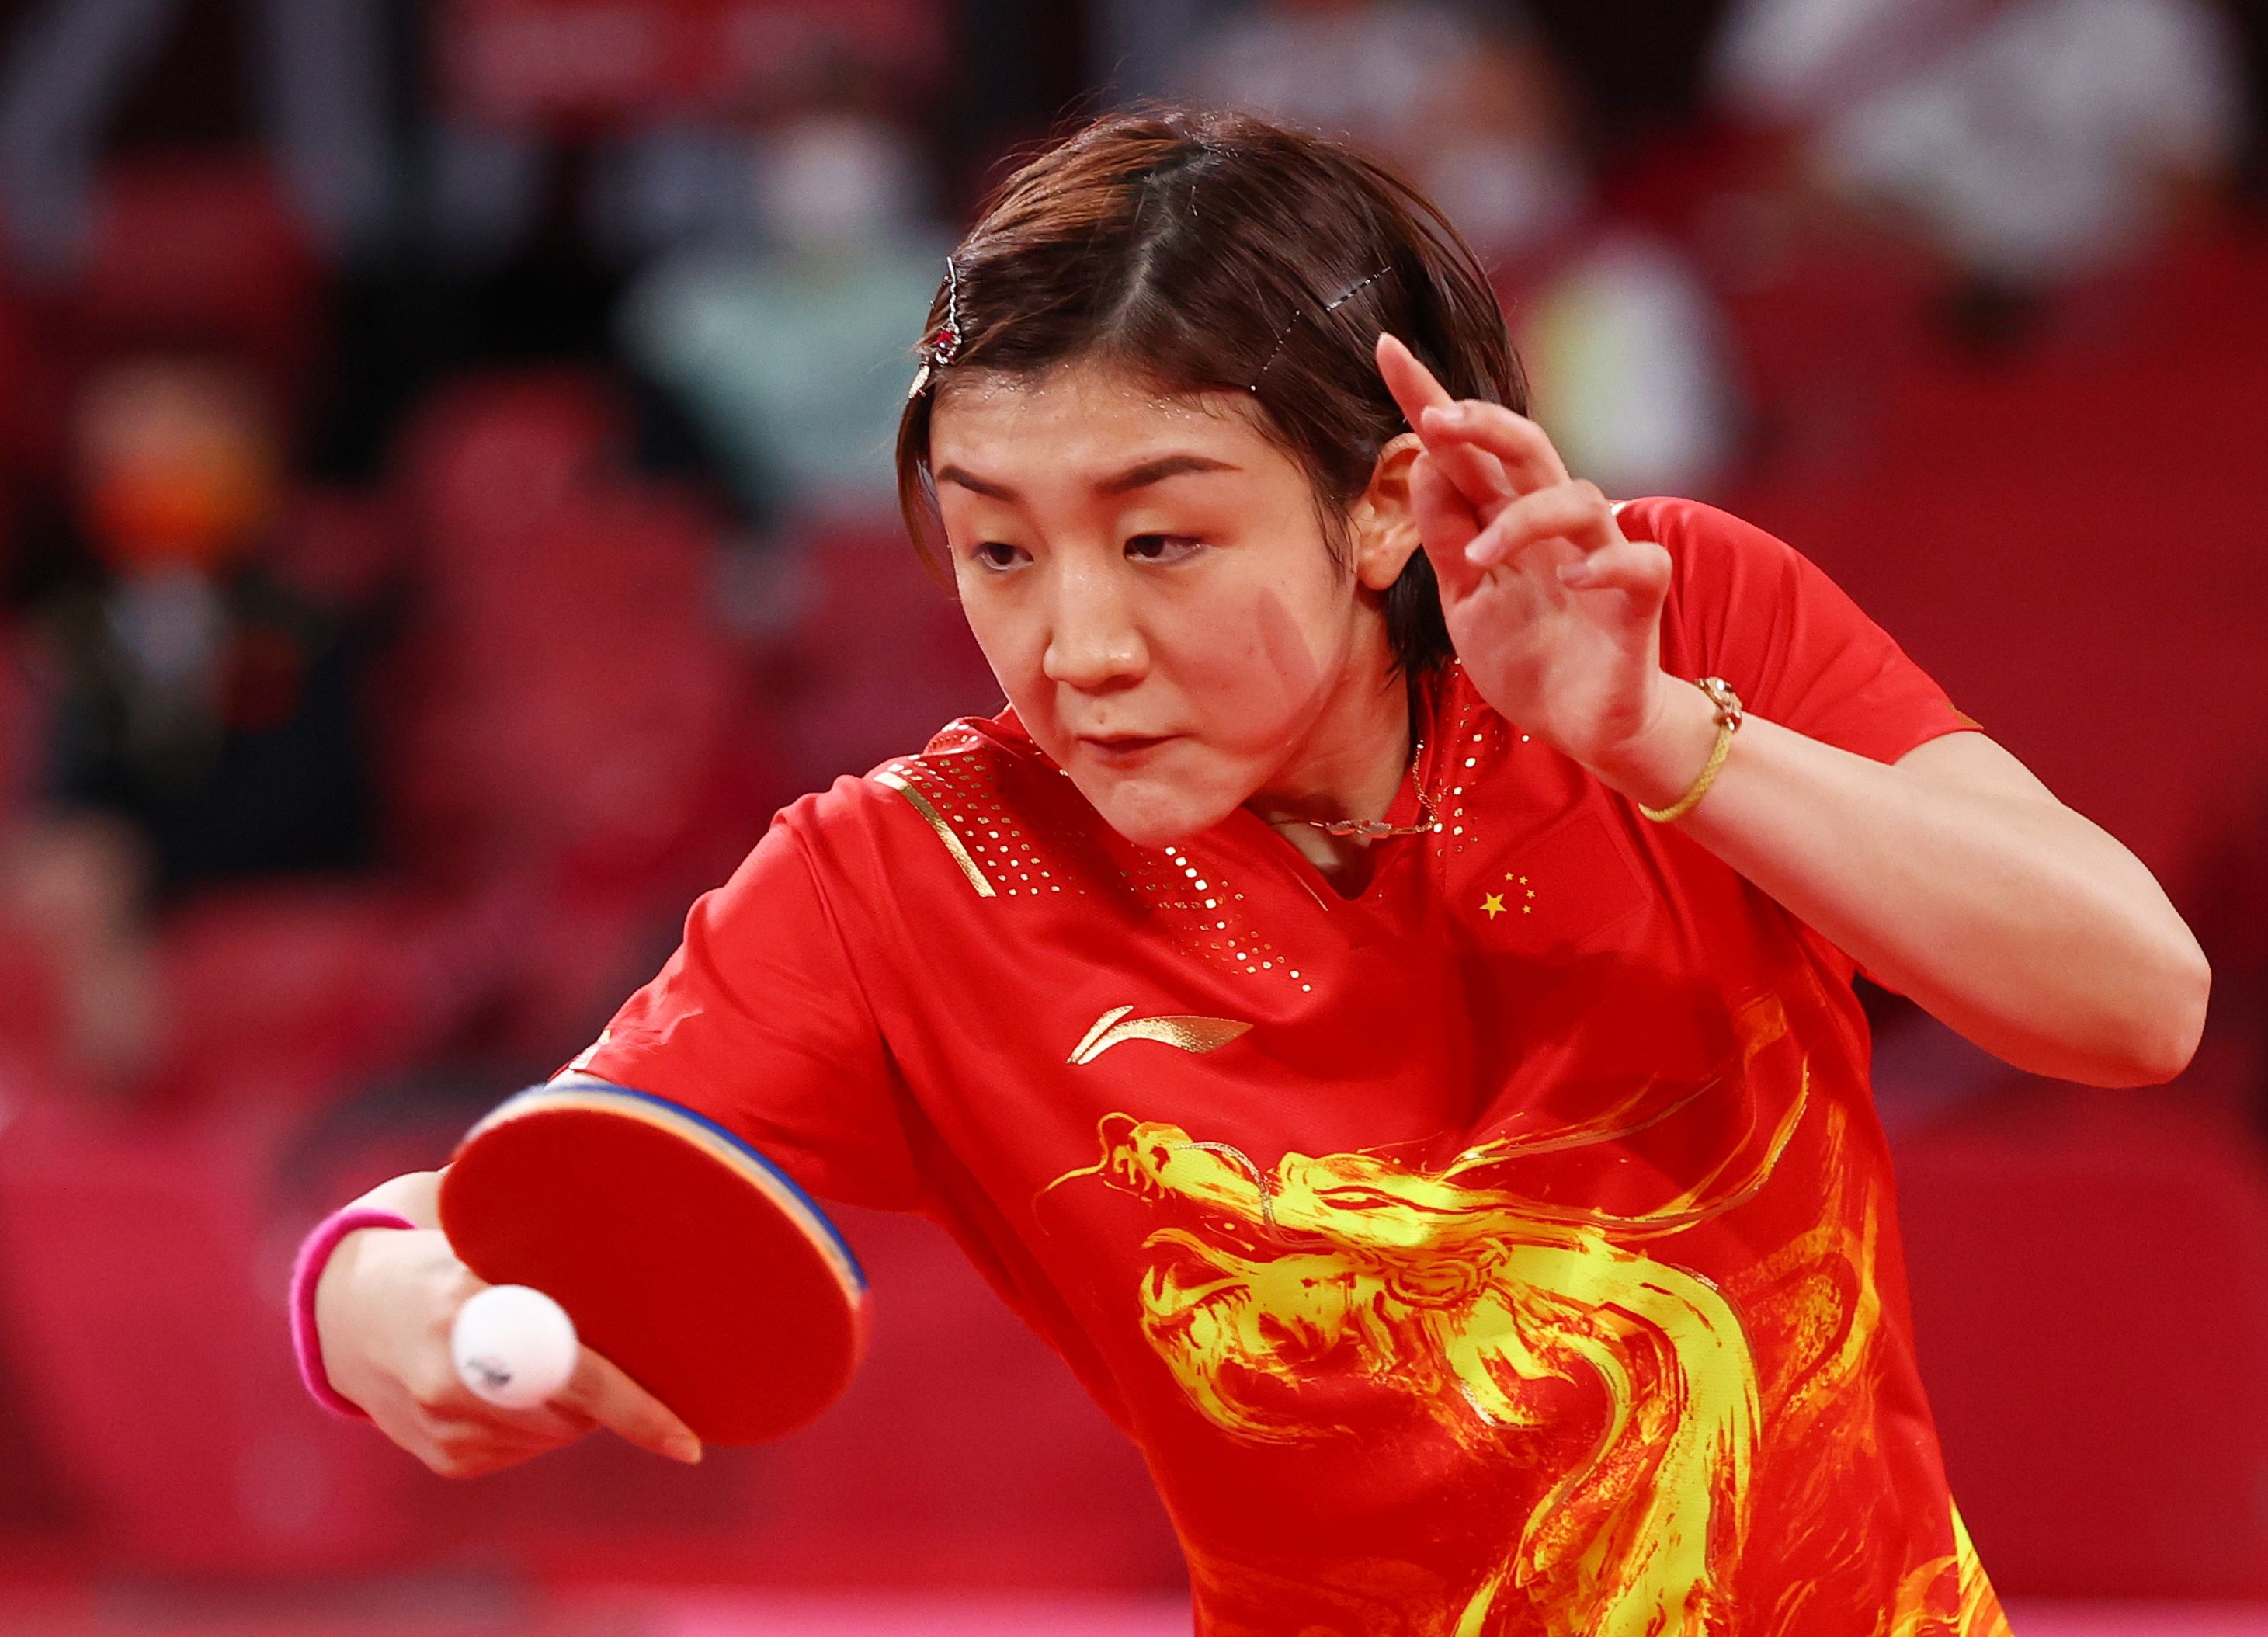 Tennis-China eye 'highest honour' as women's team advance to quarter-finals | Reuters